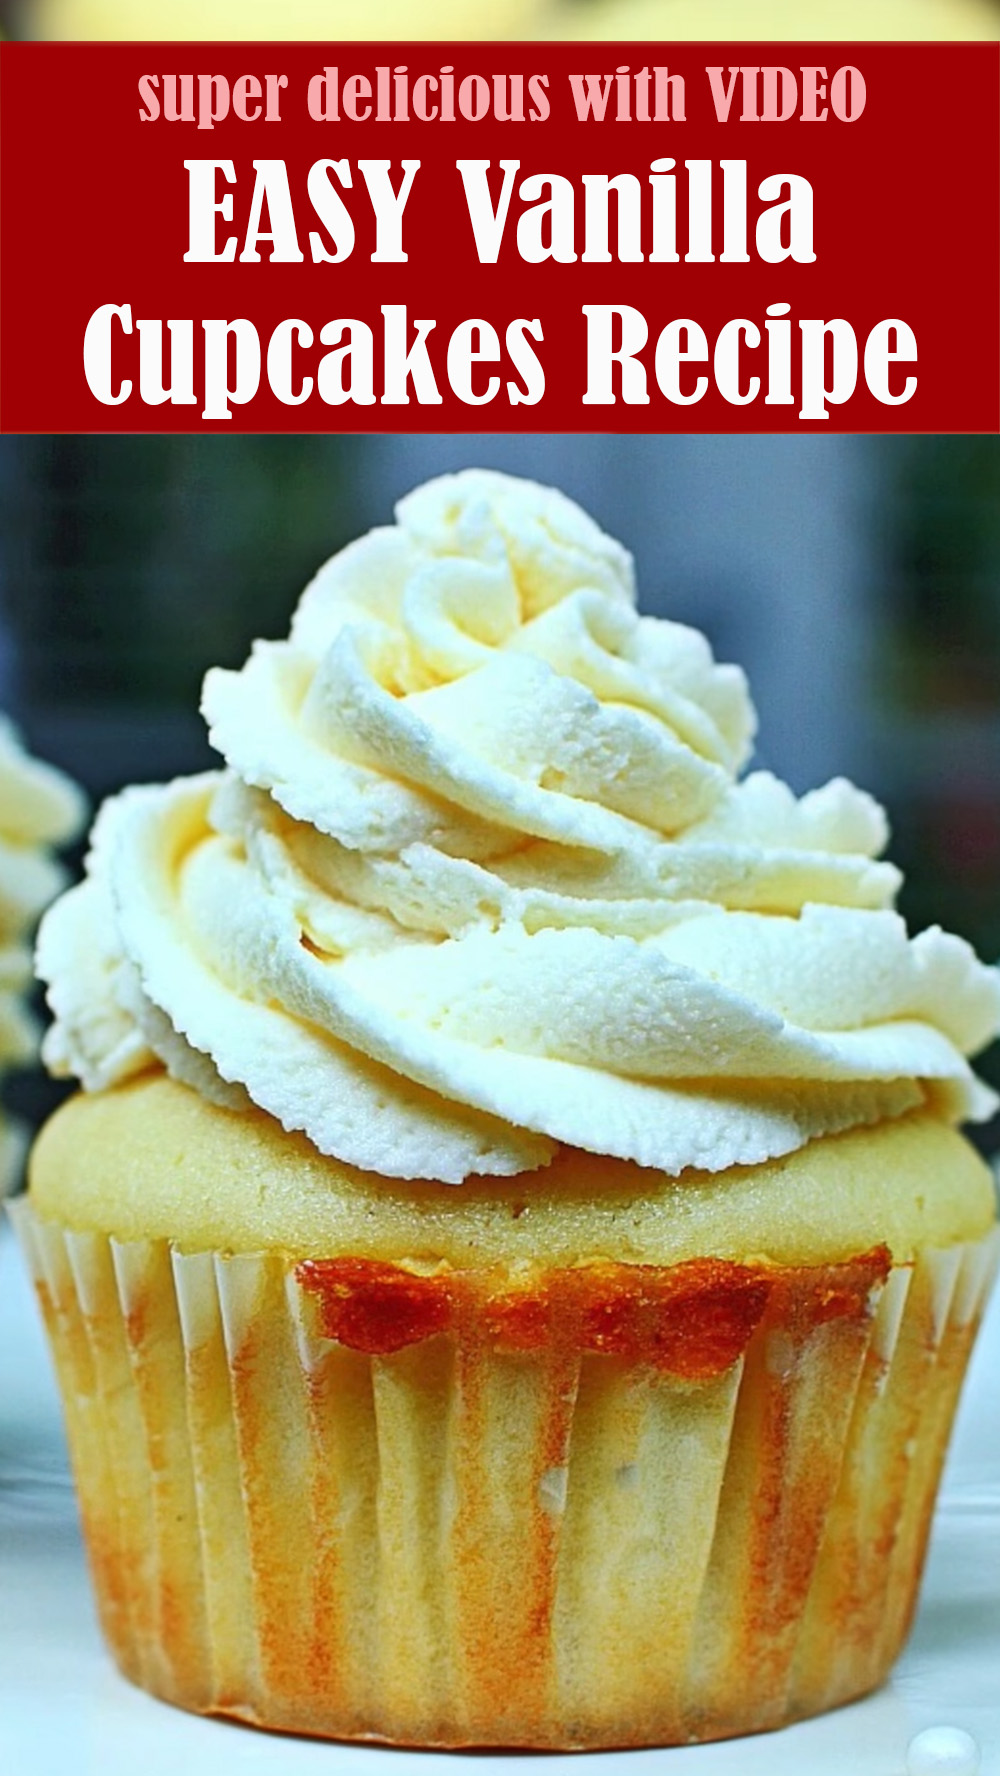 EASY Vanilla Cupcakes Recipe